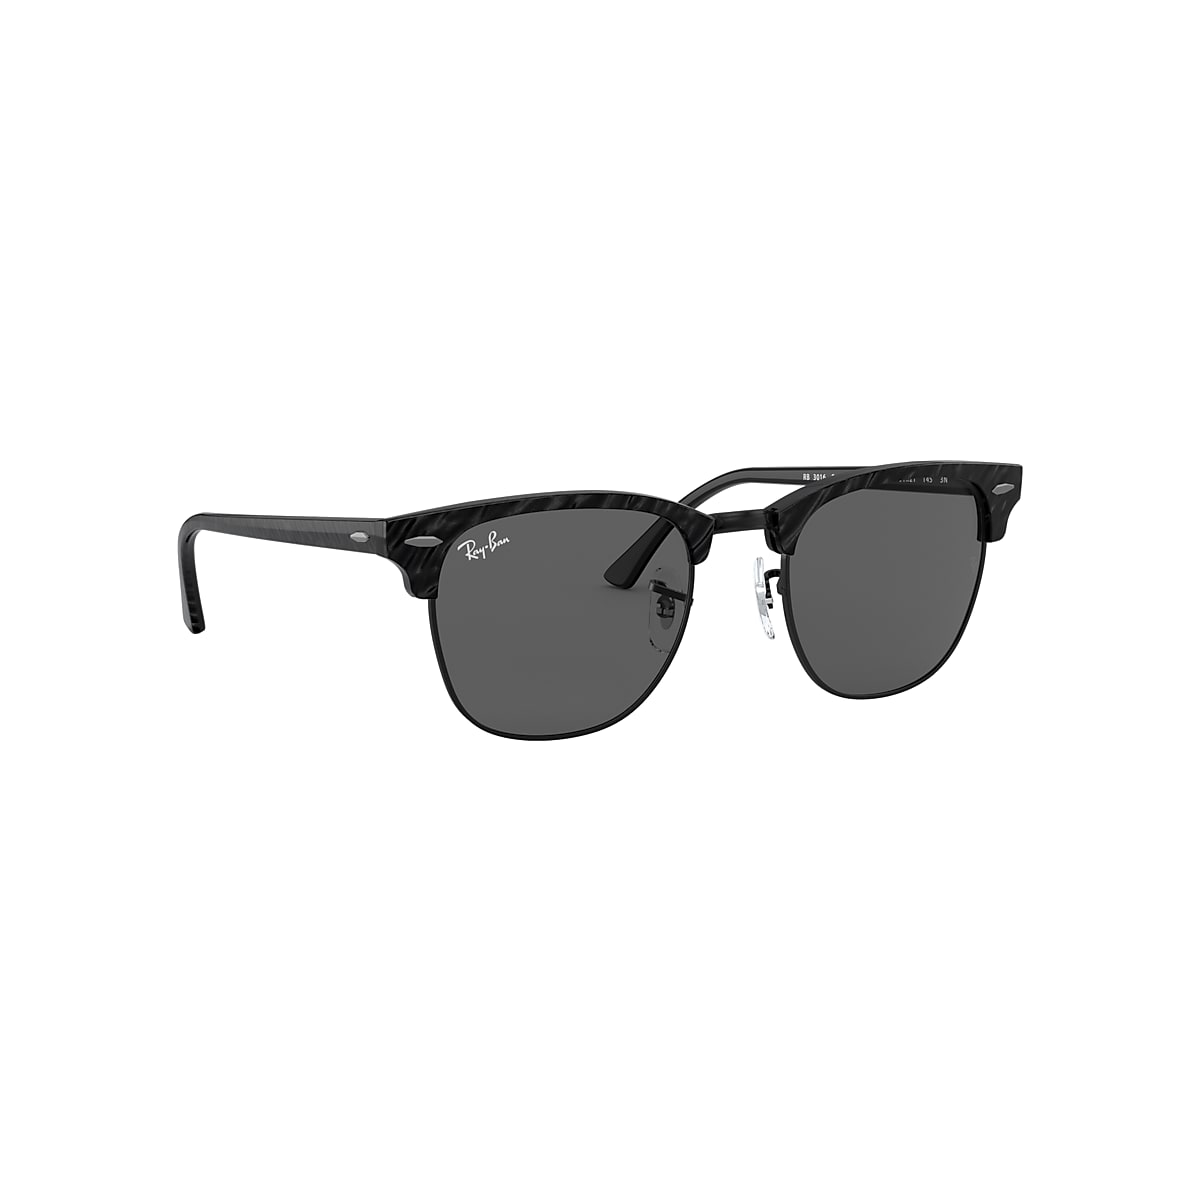 Ray-Ban Clubmaster Marble Sunglasses Black Frame Grey Lenses 49-21